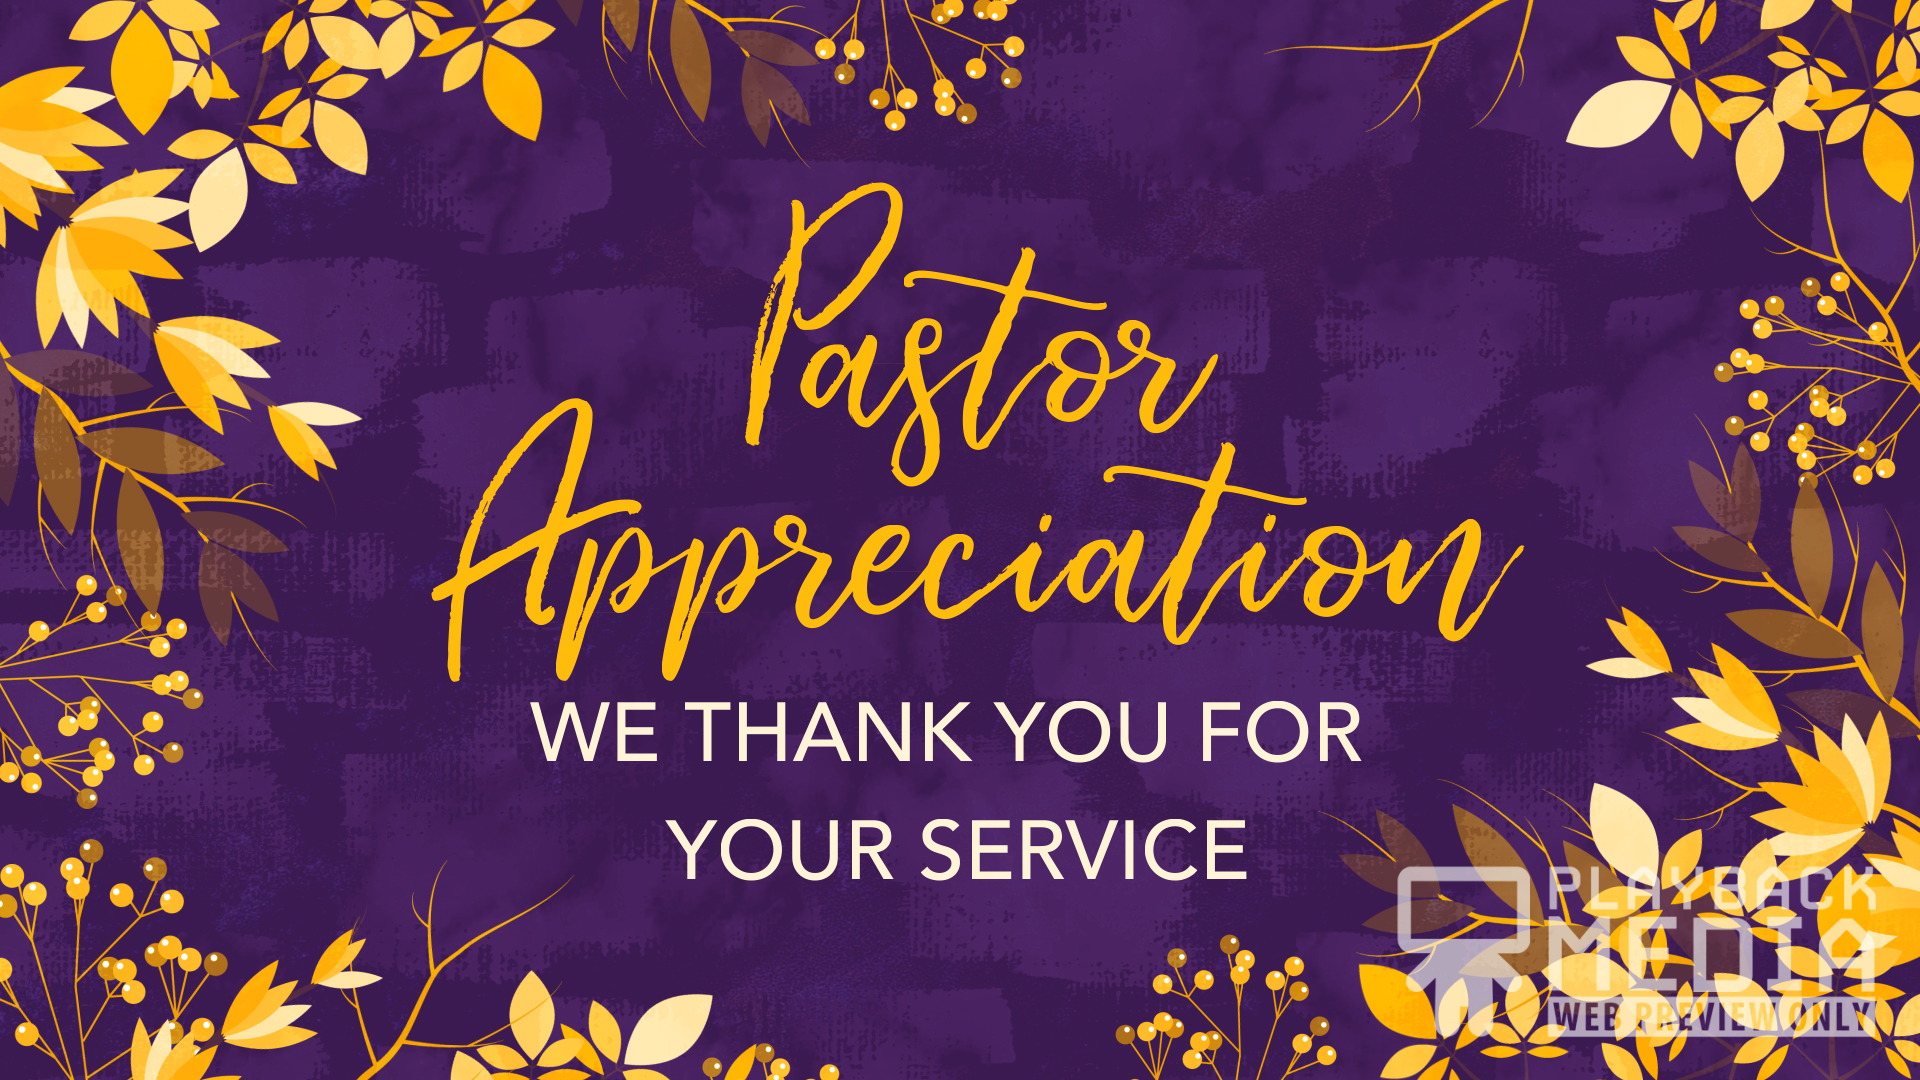 pastor appreciation day background